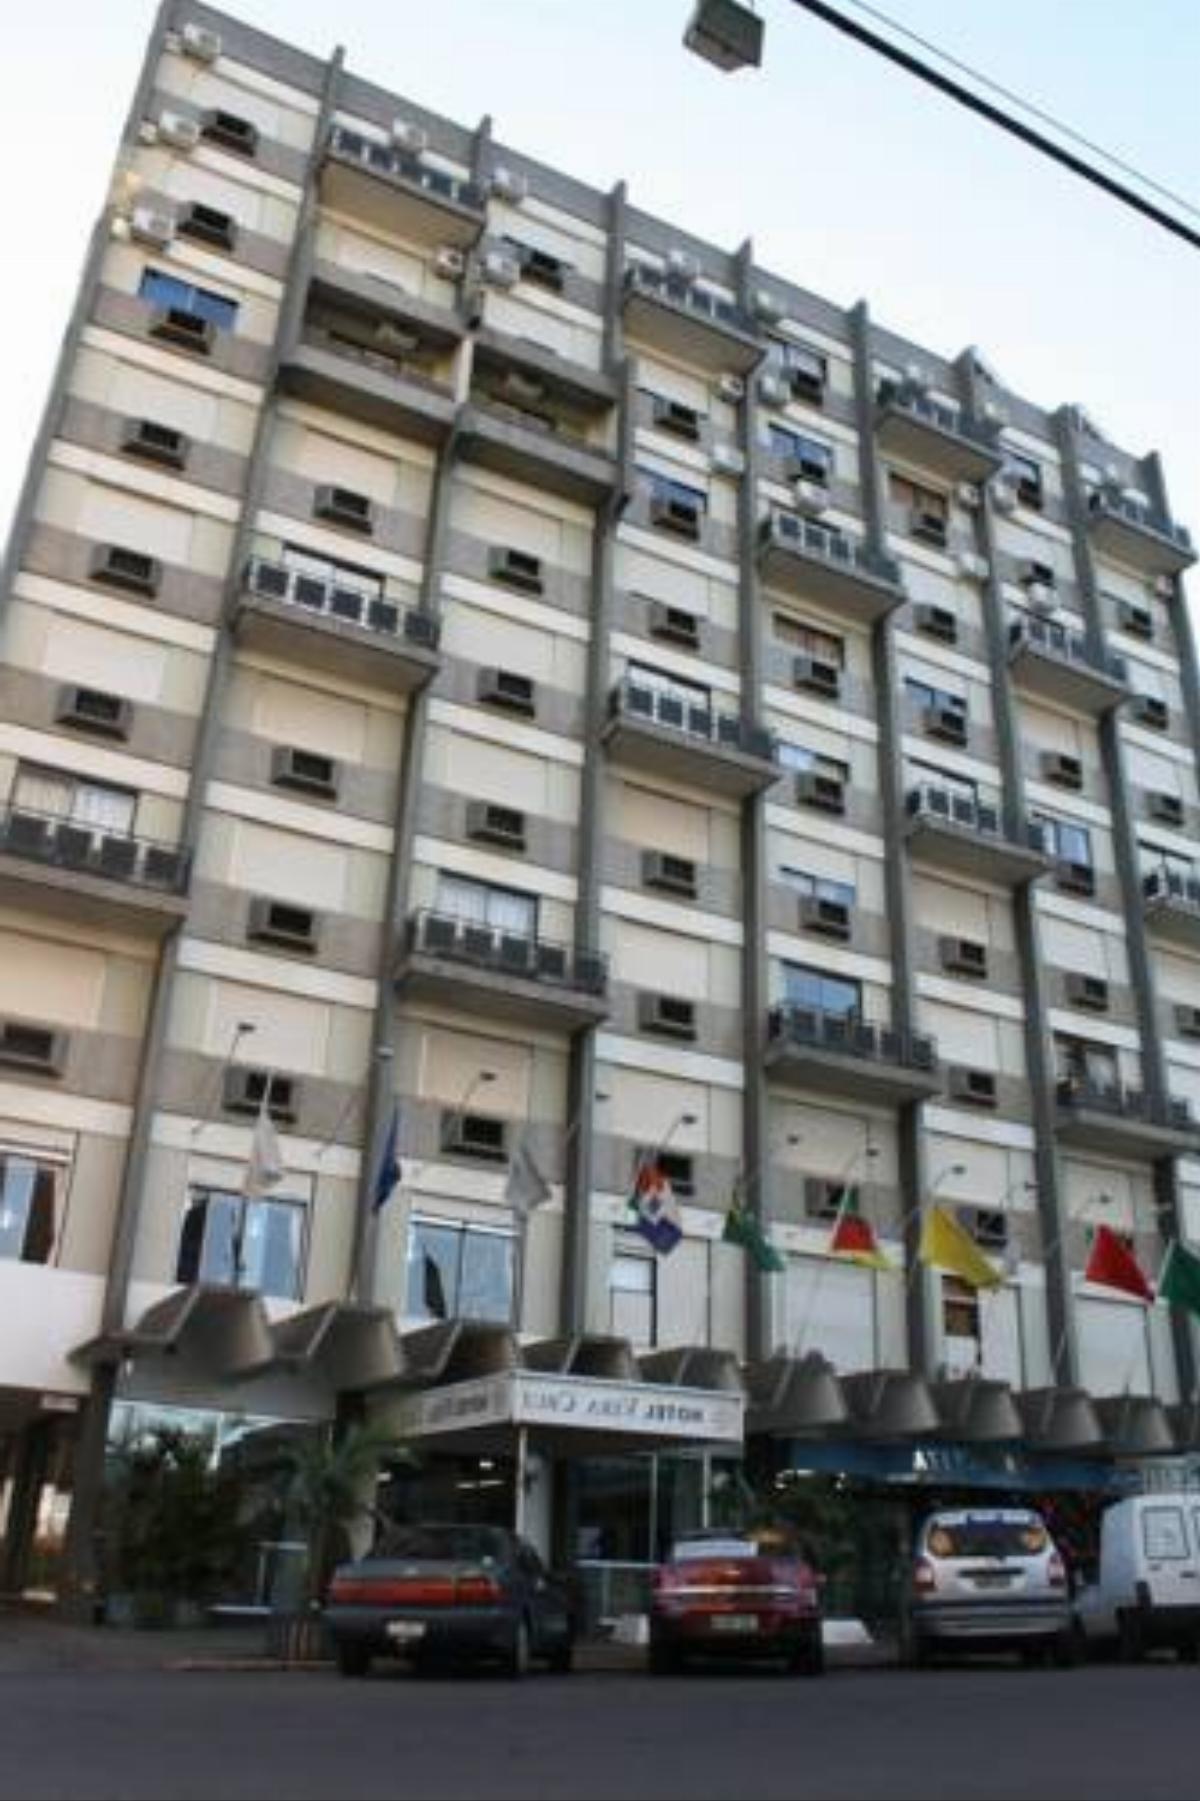 Hotel Vera Cruz